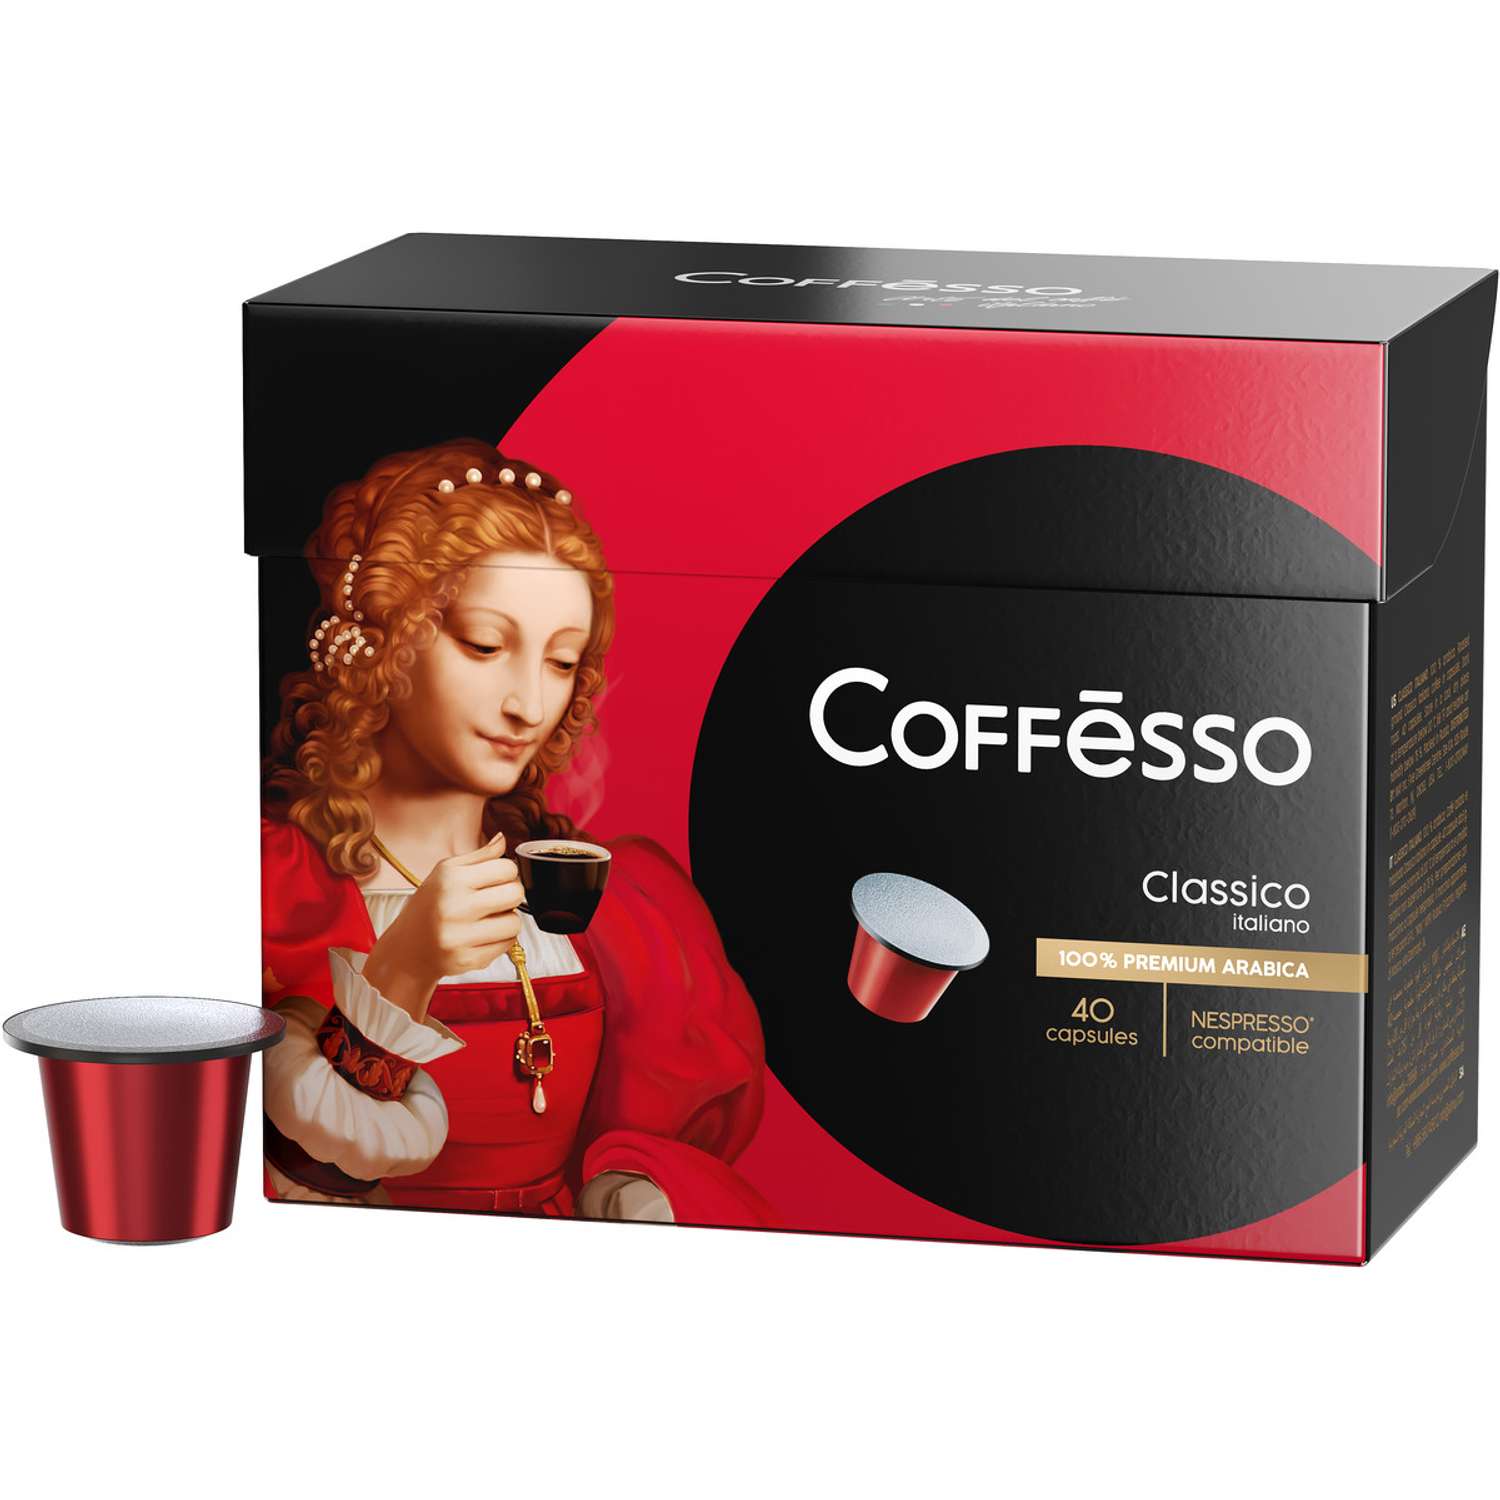 Кофе в капсулах Coffesso Classico Italiano набор 40 шт по 5 гр - фото 3